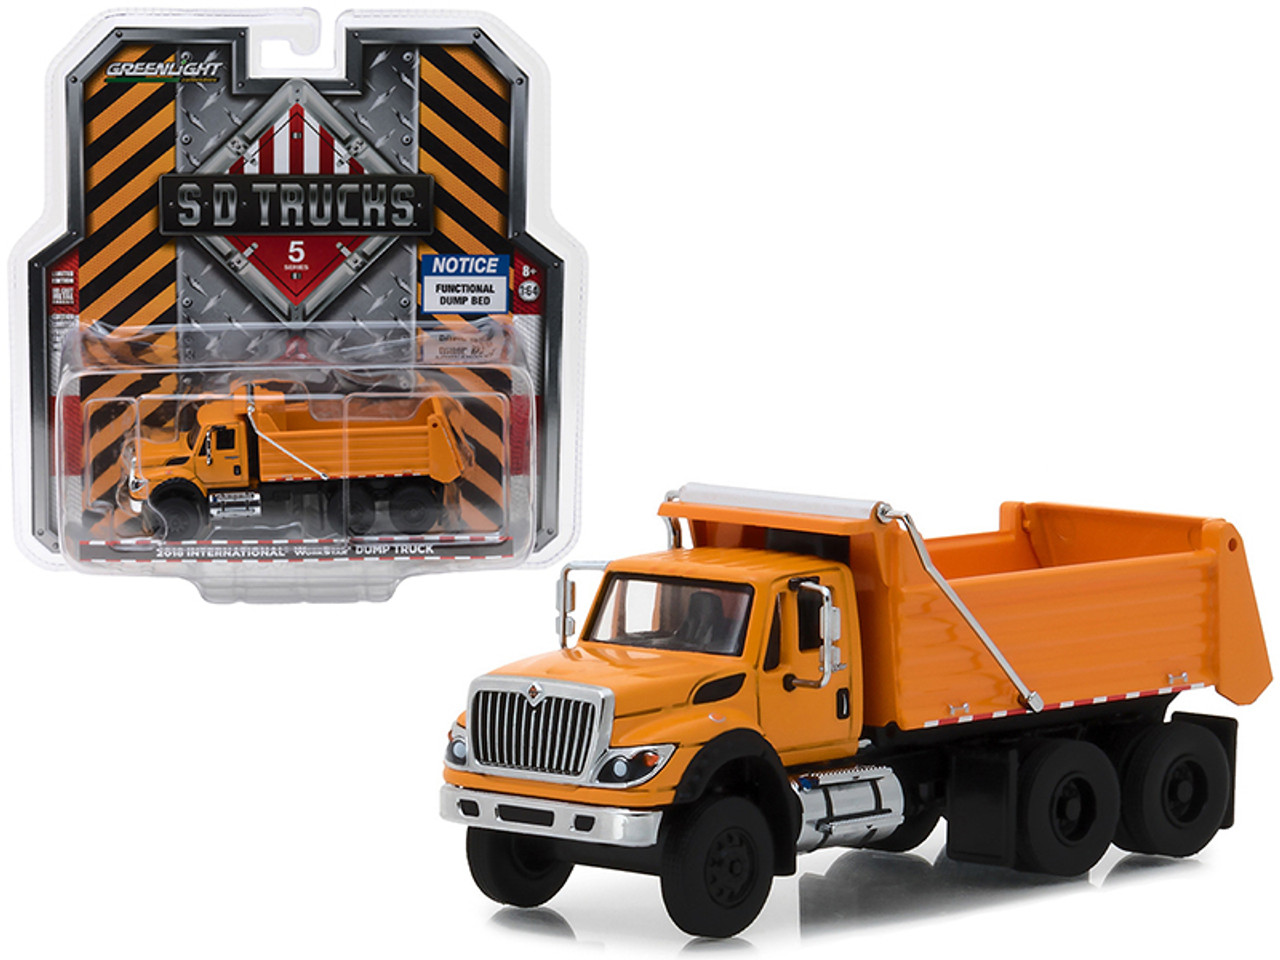 2018 International WorkStar Construction Dump Truck Orange S.D. Trucks Series 5 1/64 Diecast Model by Greenlight